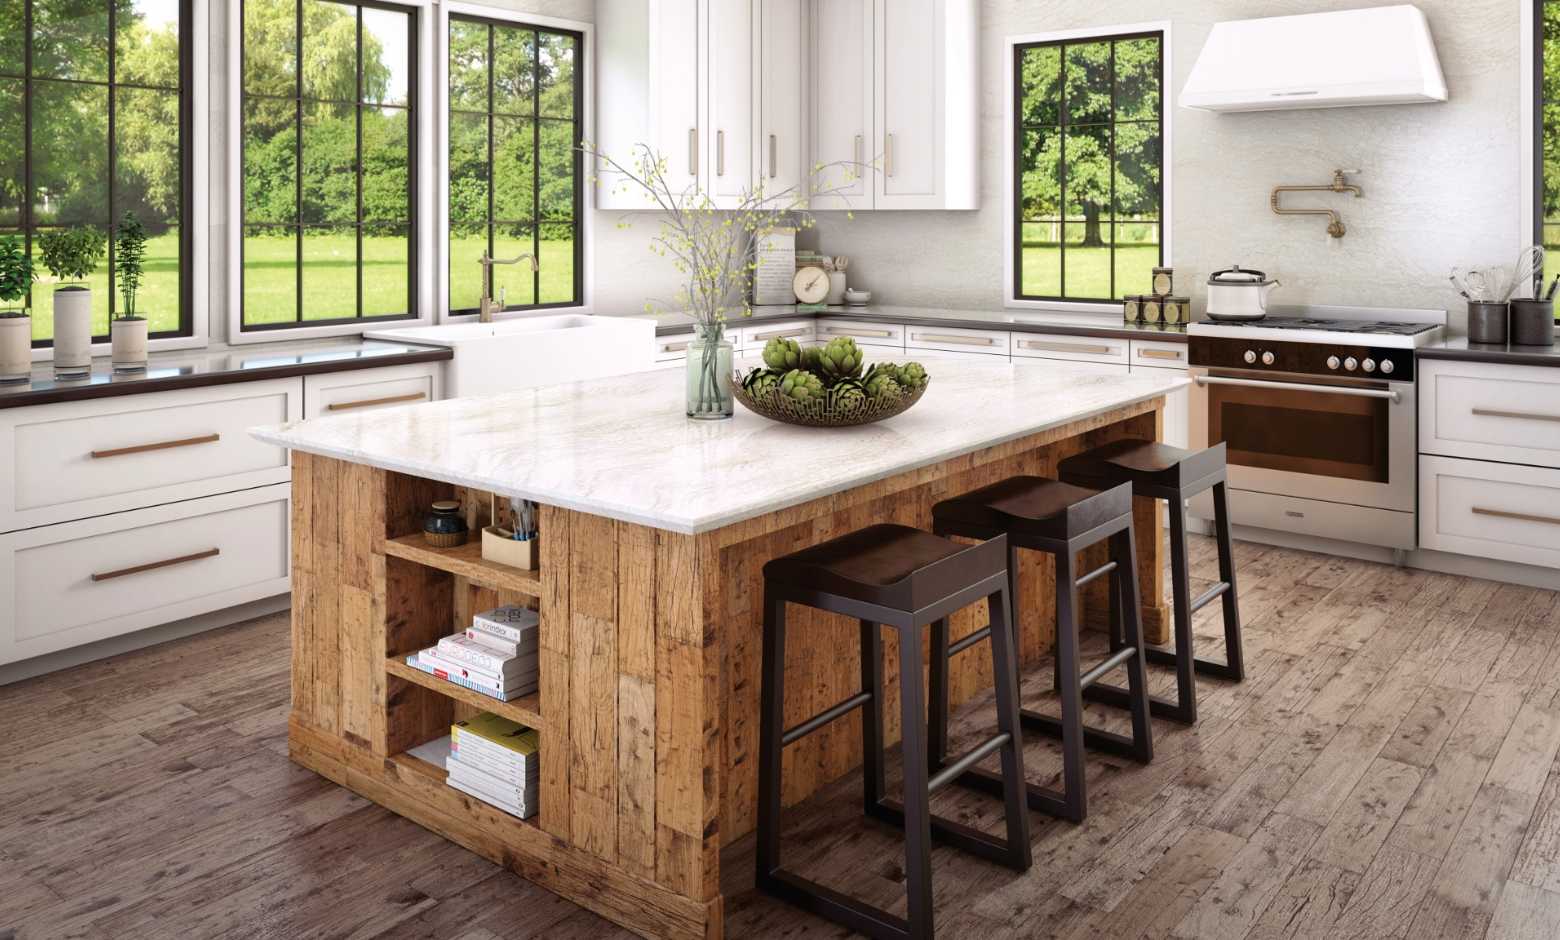 Ironsbridge Quartz Countertops with White Shaker Cabinets and Reclaimed Wood Flooring